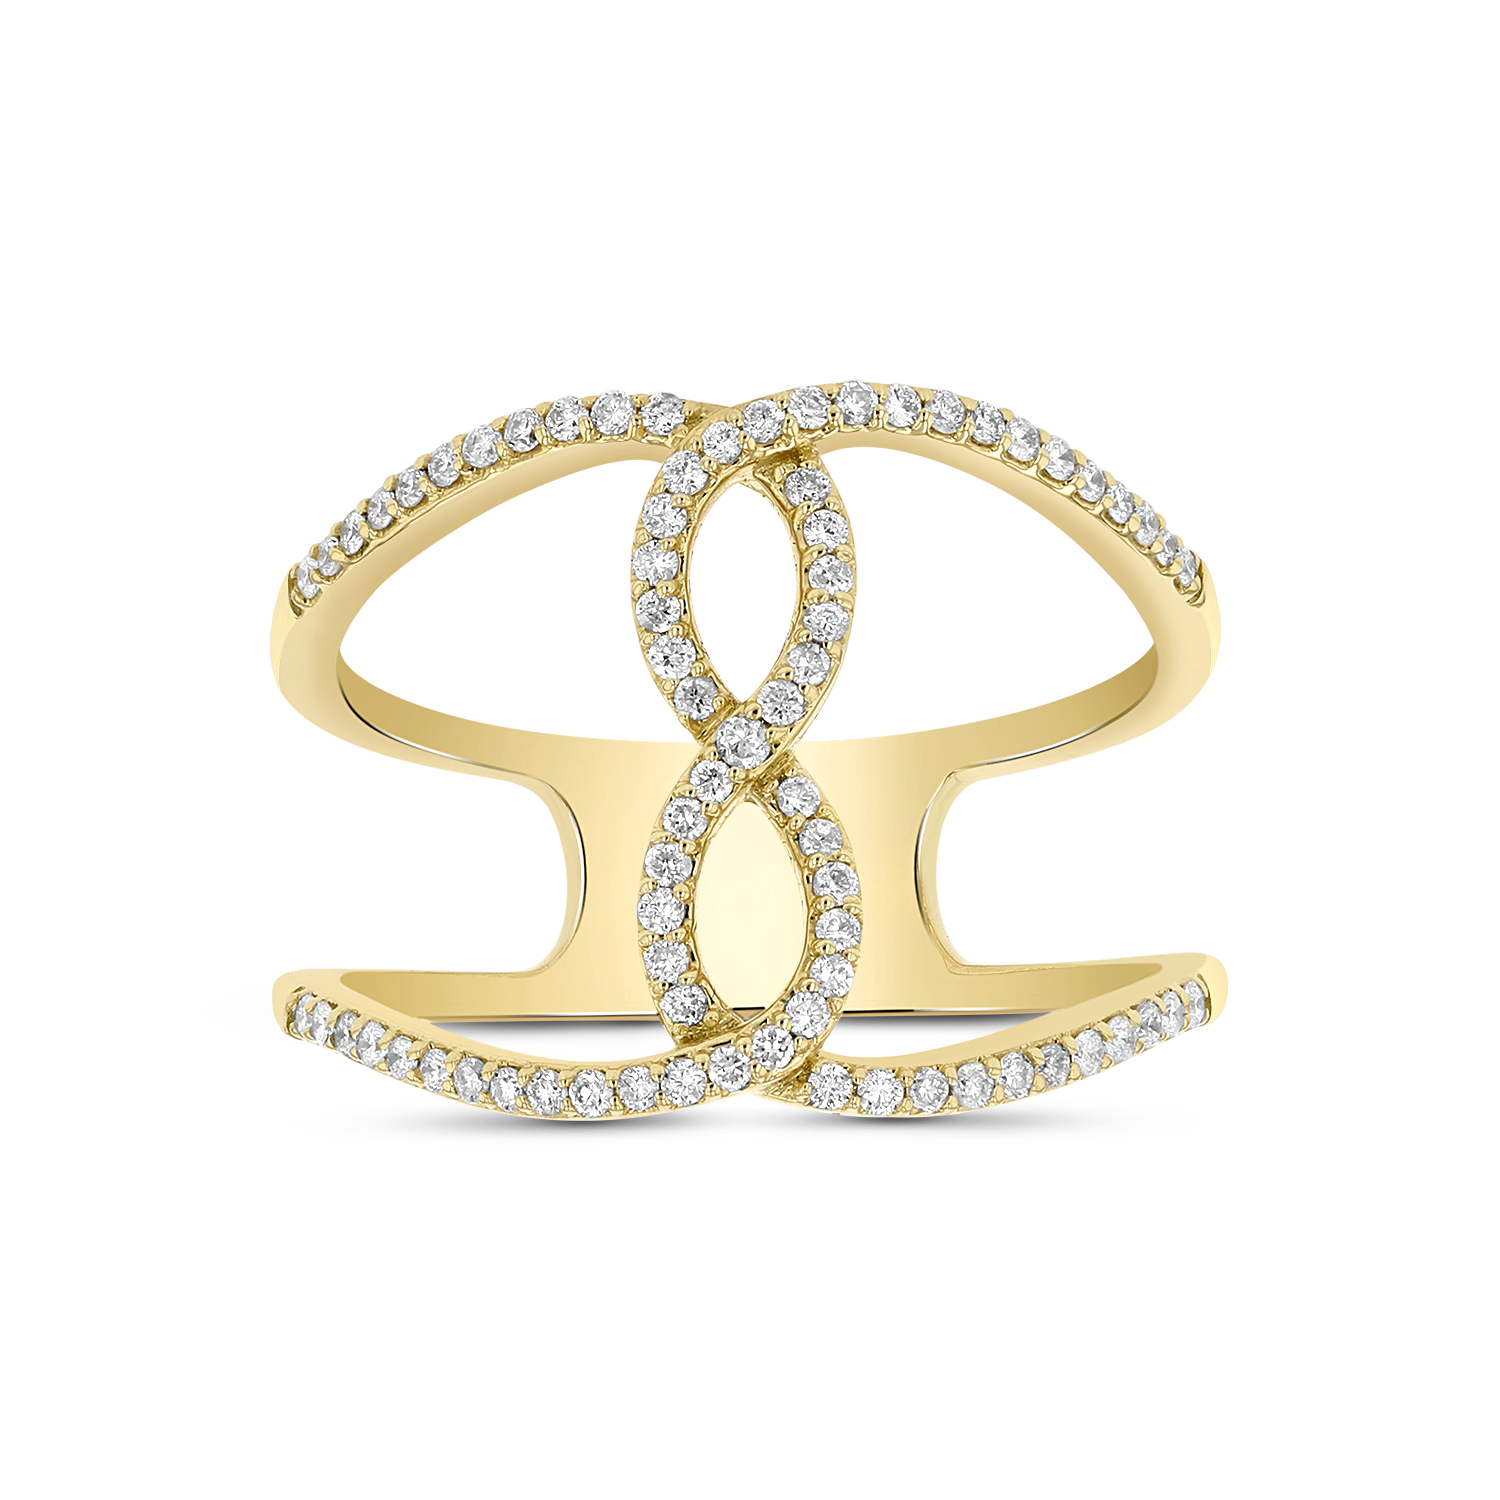 View 0.27ctw Diamond Fashion Ring in 14k Yellow Gold